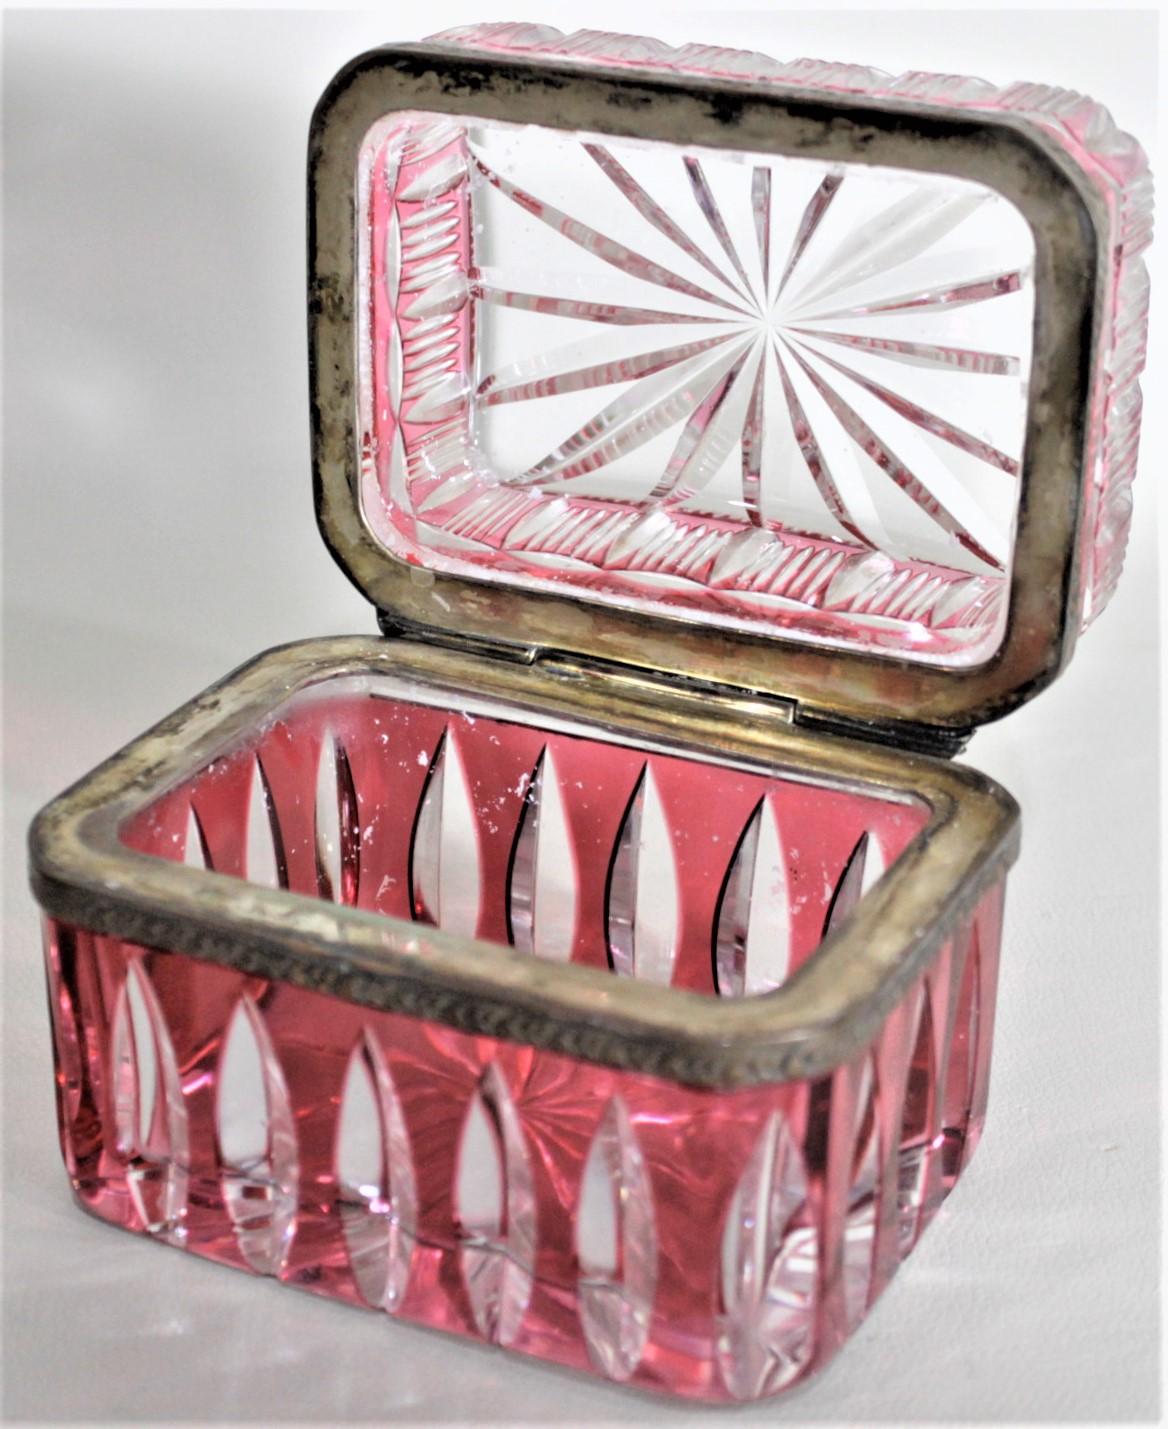 20th Century Art Deco Czech Ruby Cut to Clear Glass Jewelry Casket or Box